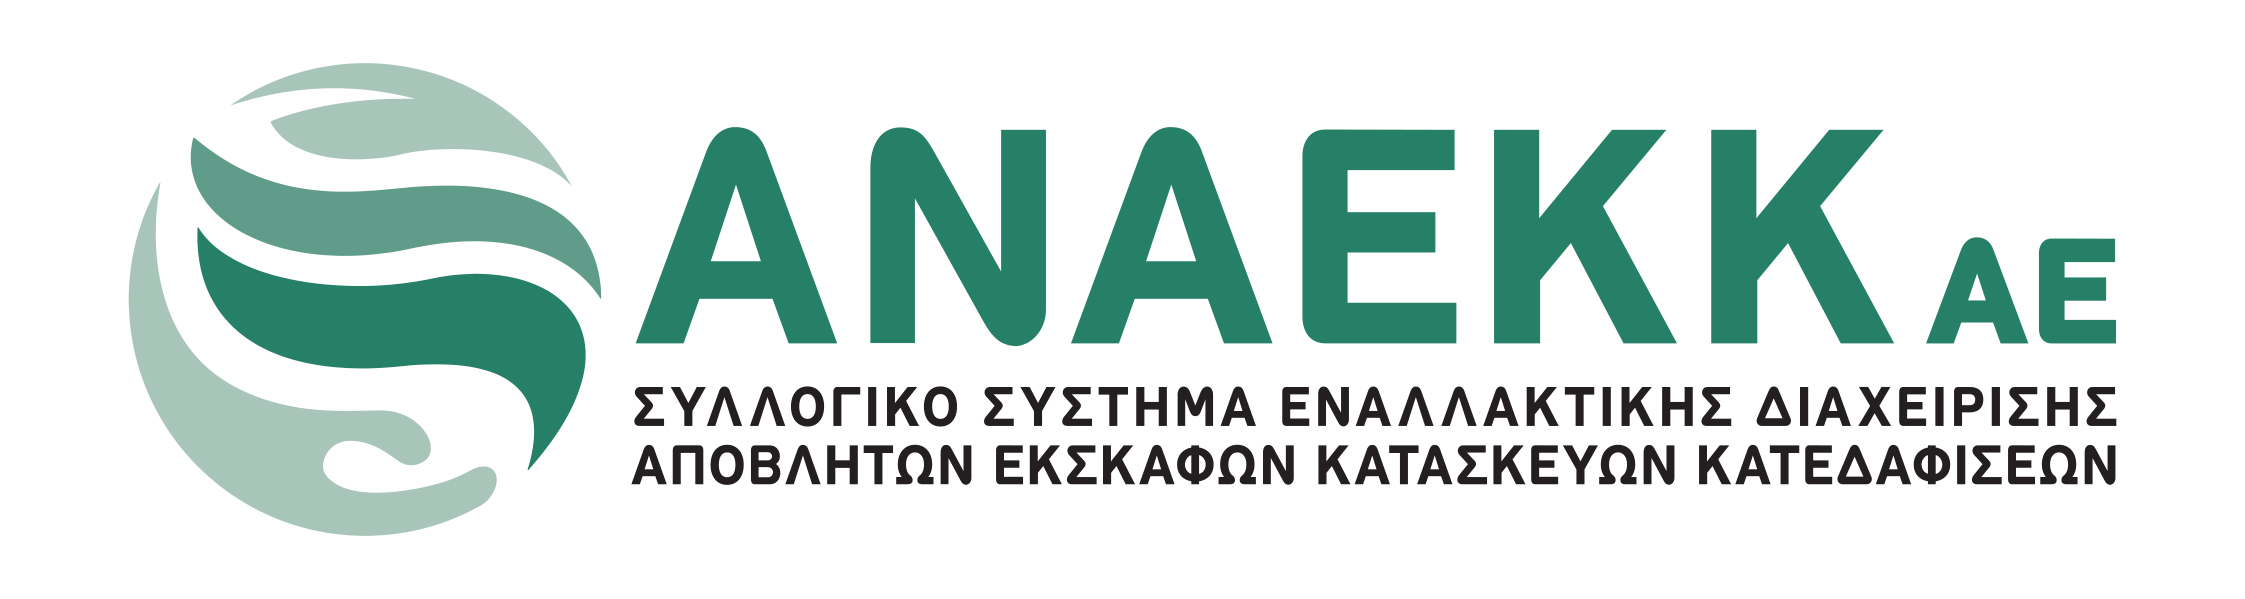 anaekk_logo.jpg